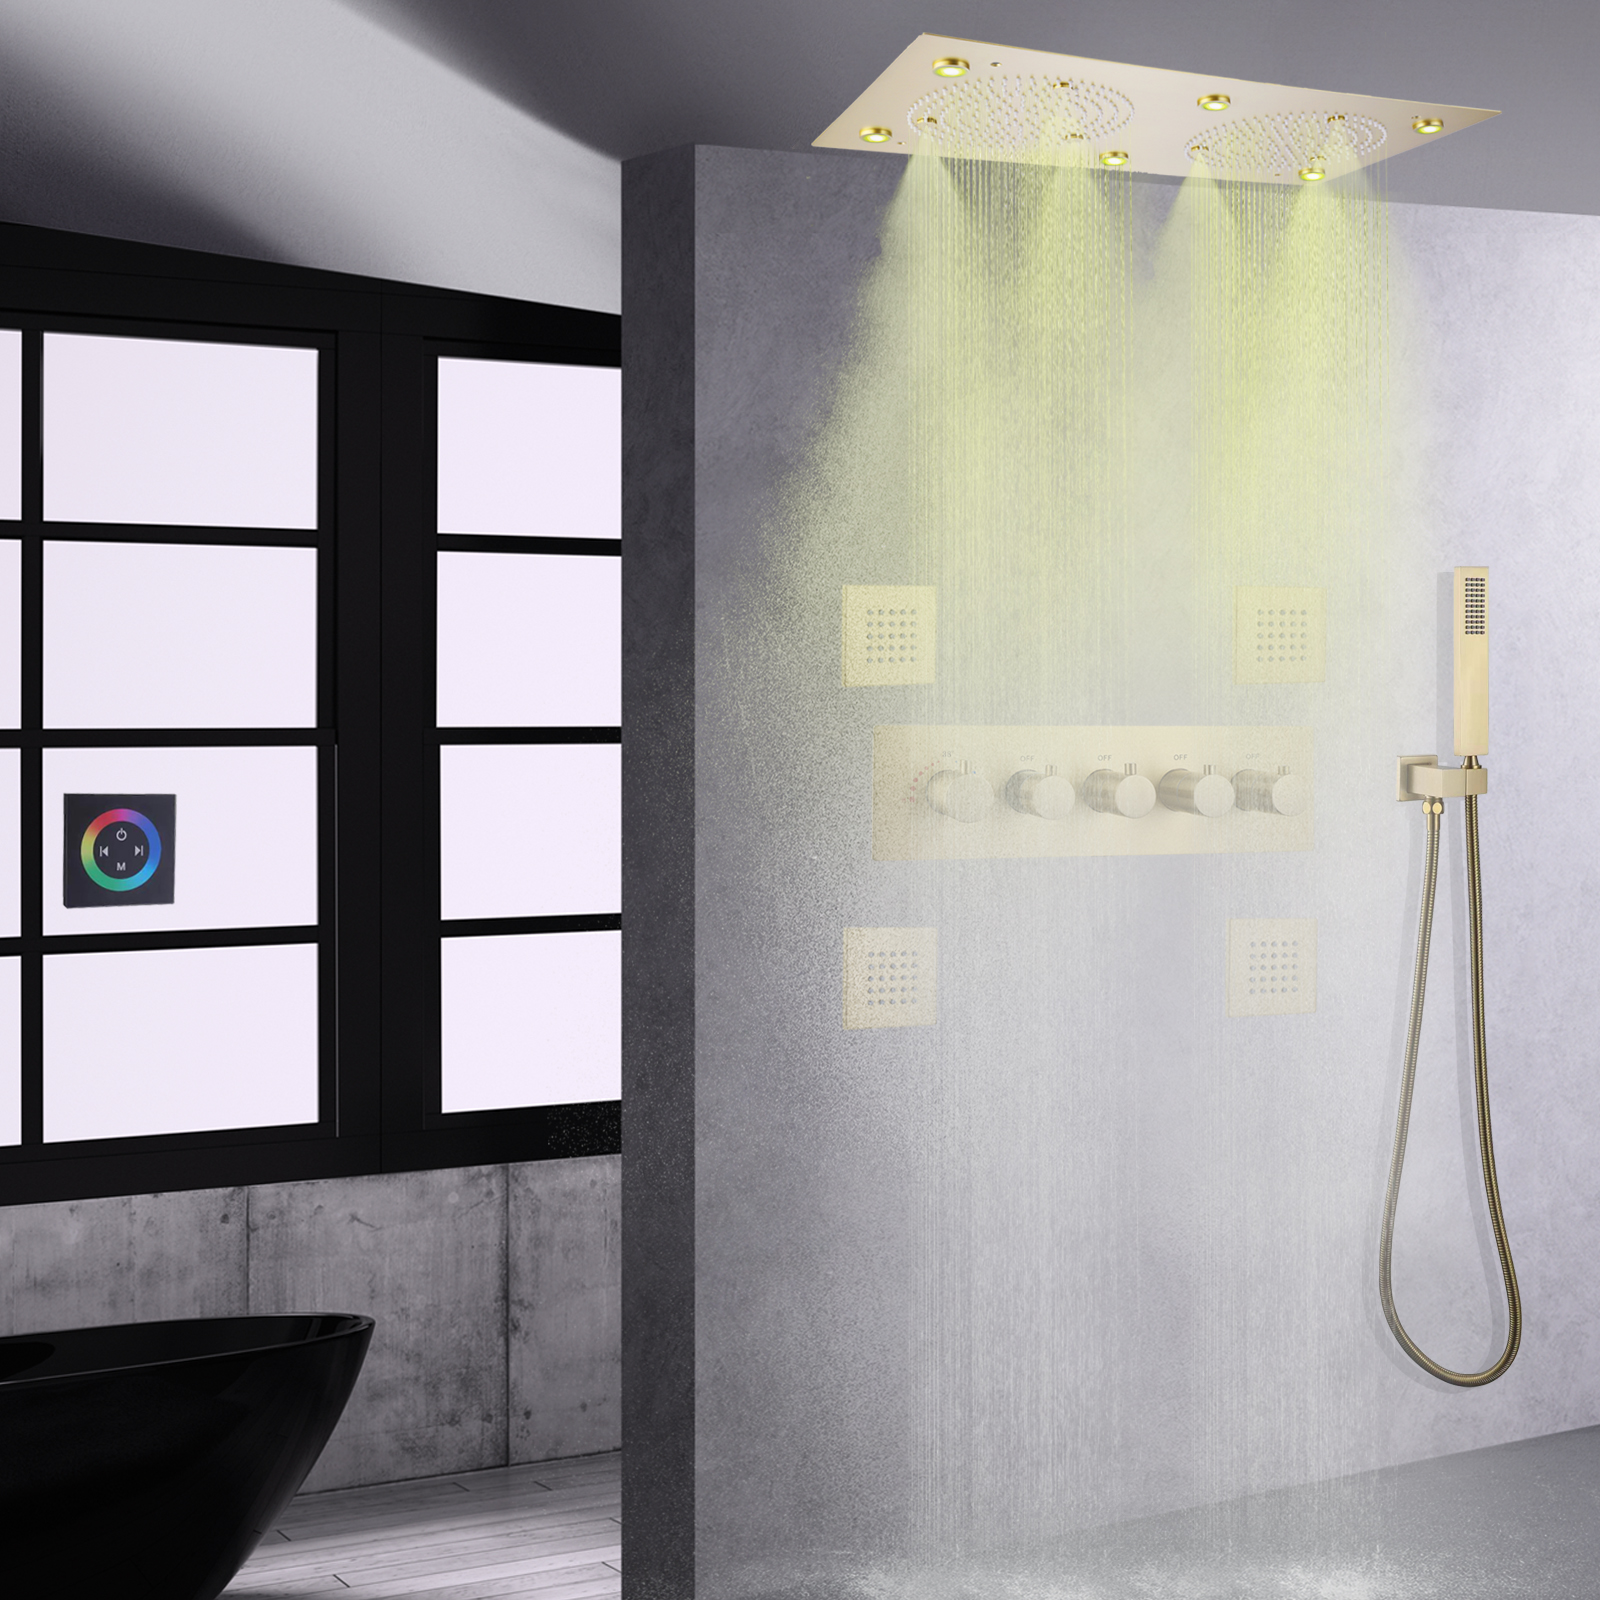 Brushed Gold LED Shower System Set Bathroom ThermostaticMist Rainfall Shower Massage Head